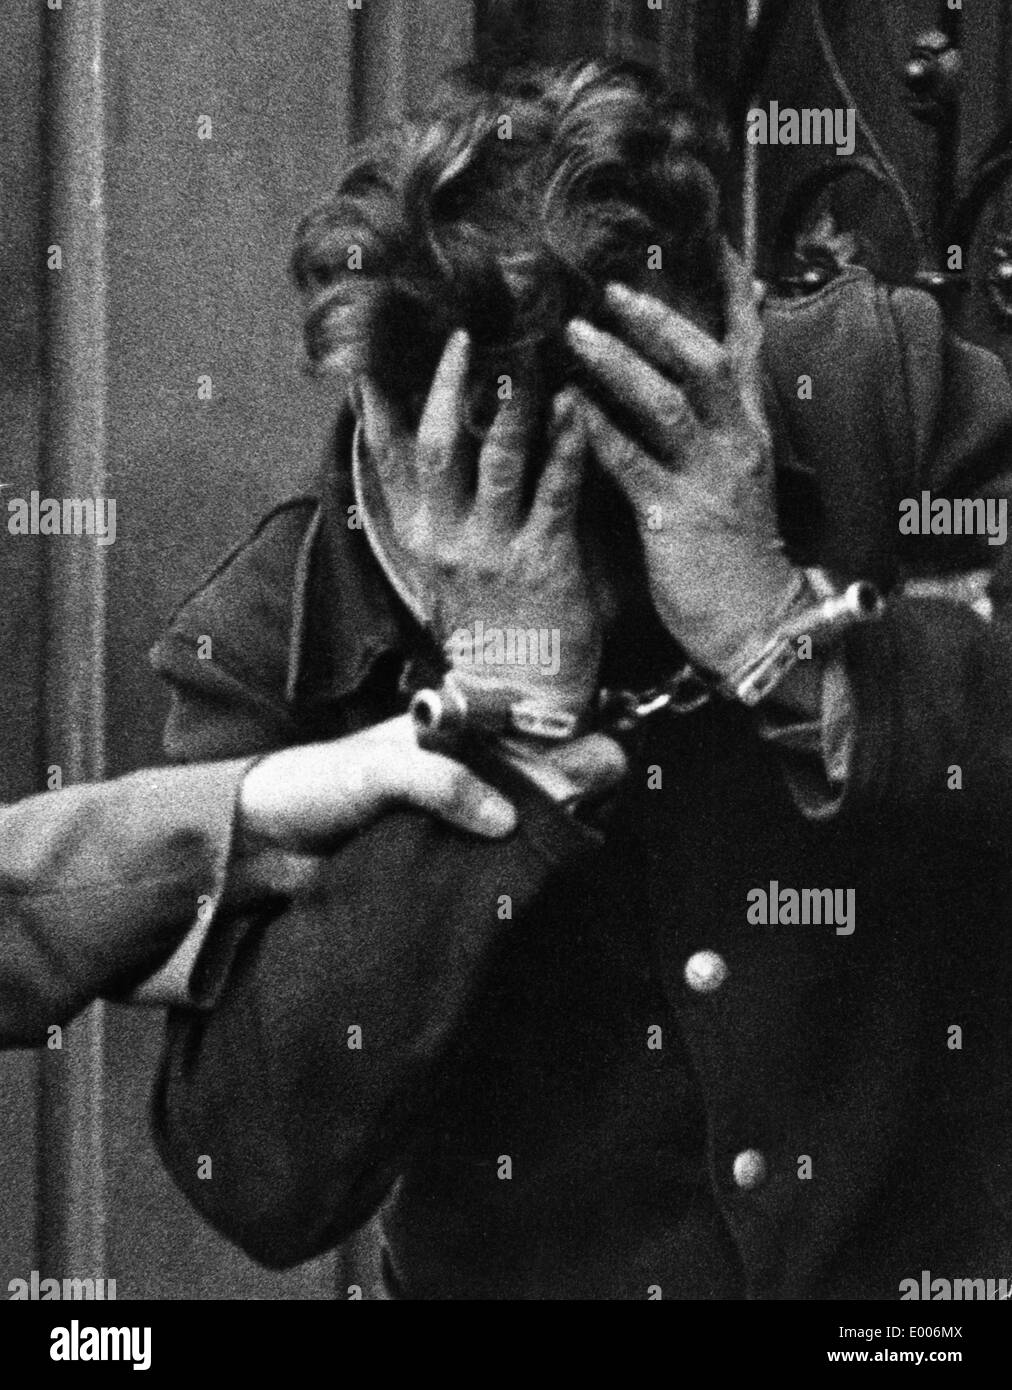 Emil Tillmann when arrested, 1958 Stock Photo